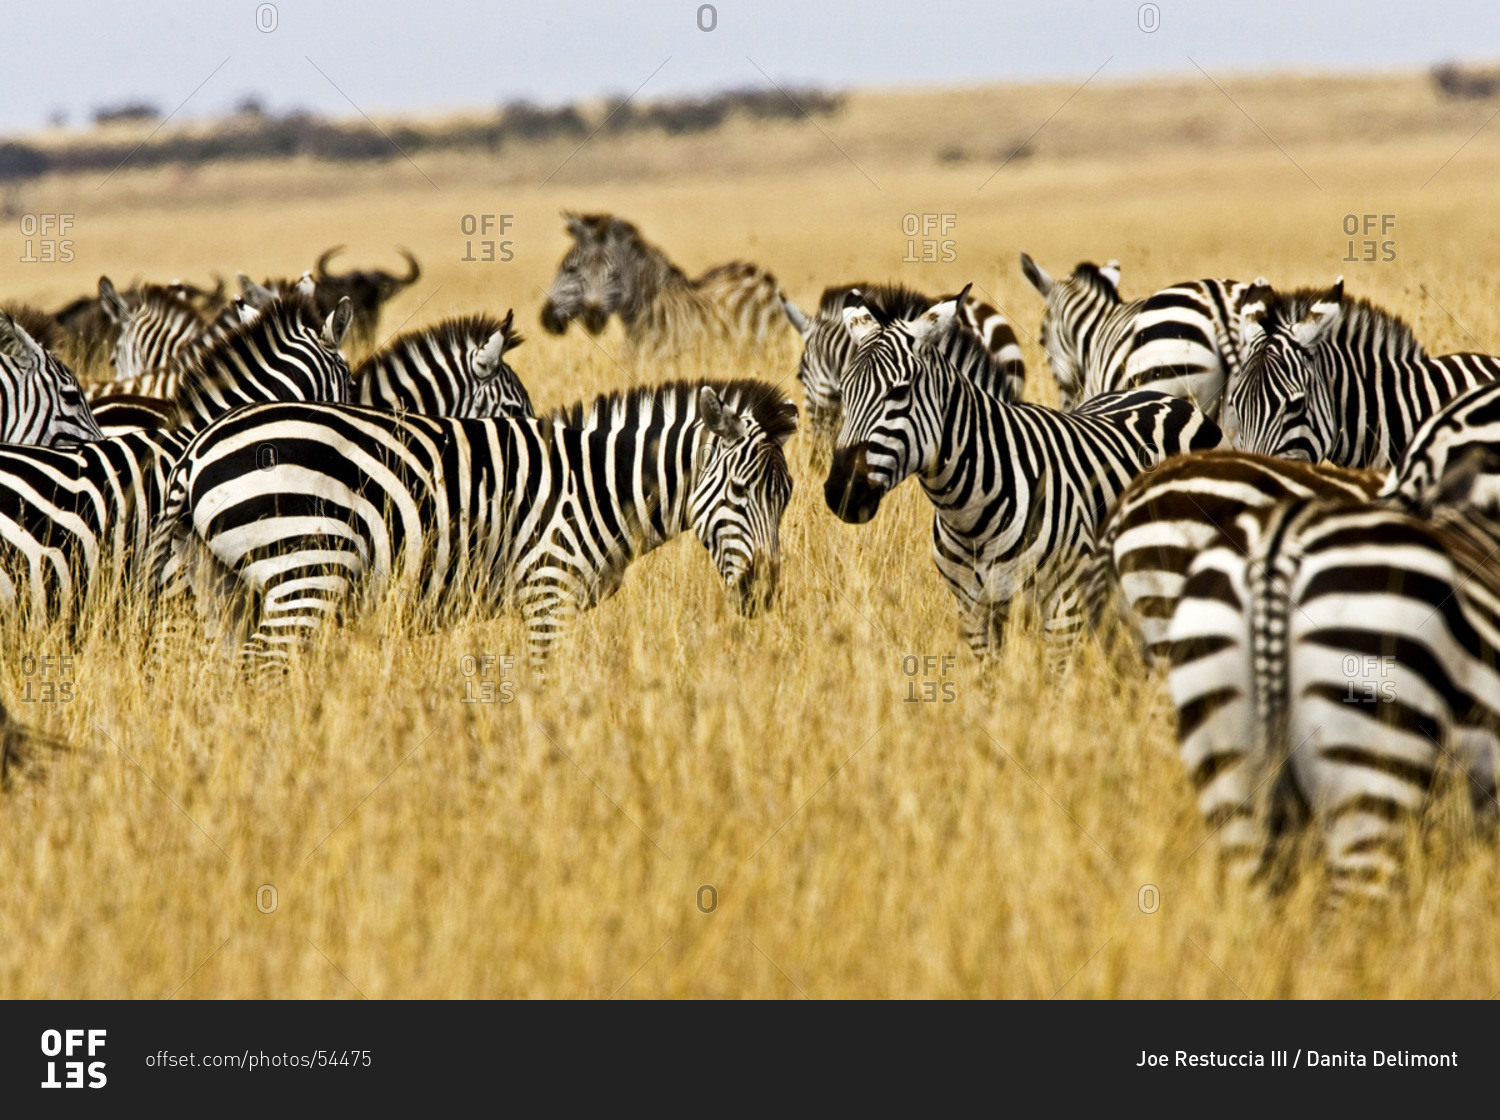 Zebras herding in the fields of the Maasai Mara Kenya